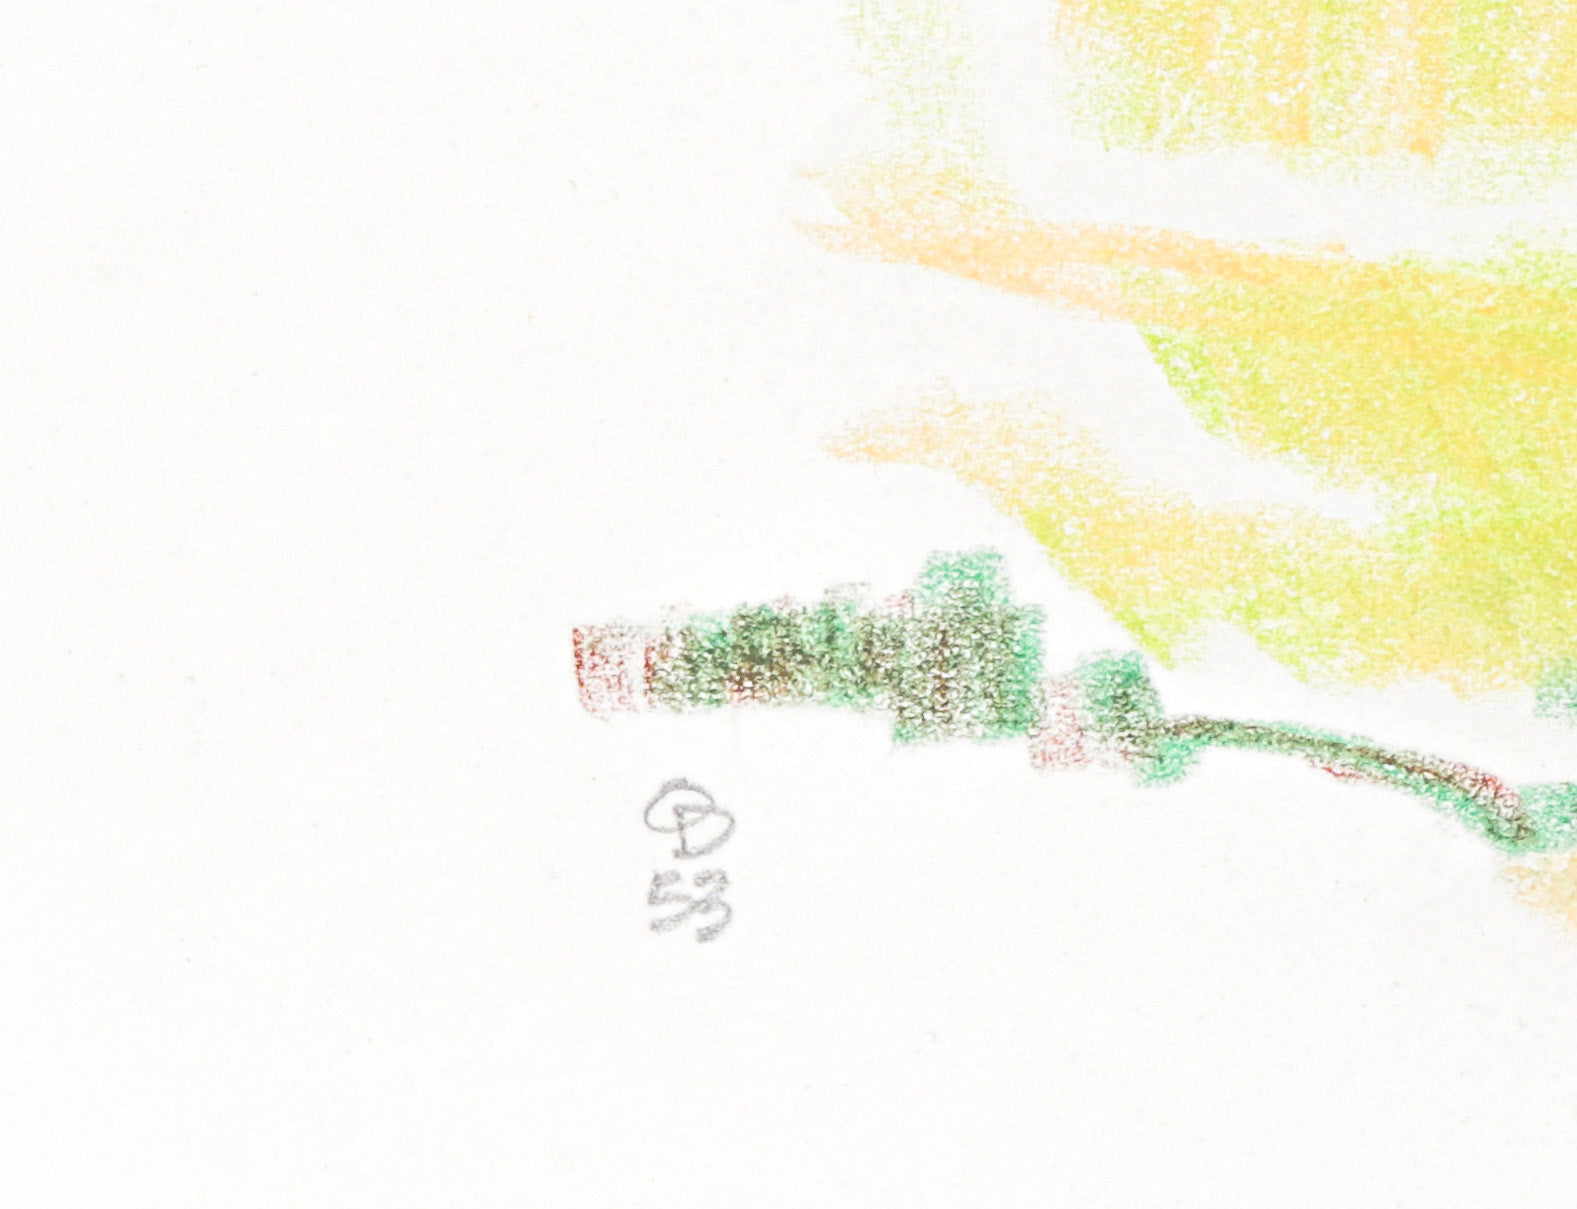 Redwood Still Life<br>1953 Colored Pencil<br><br>#C2766